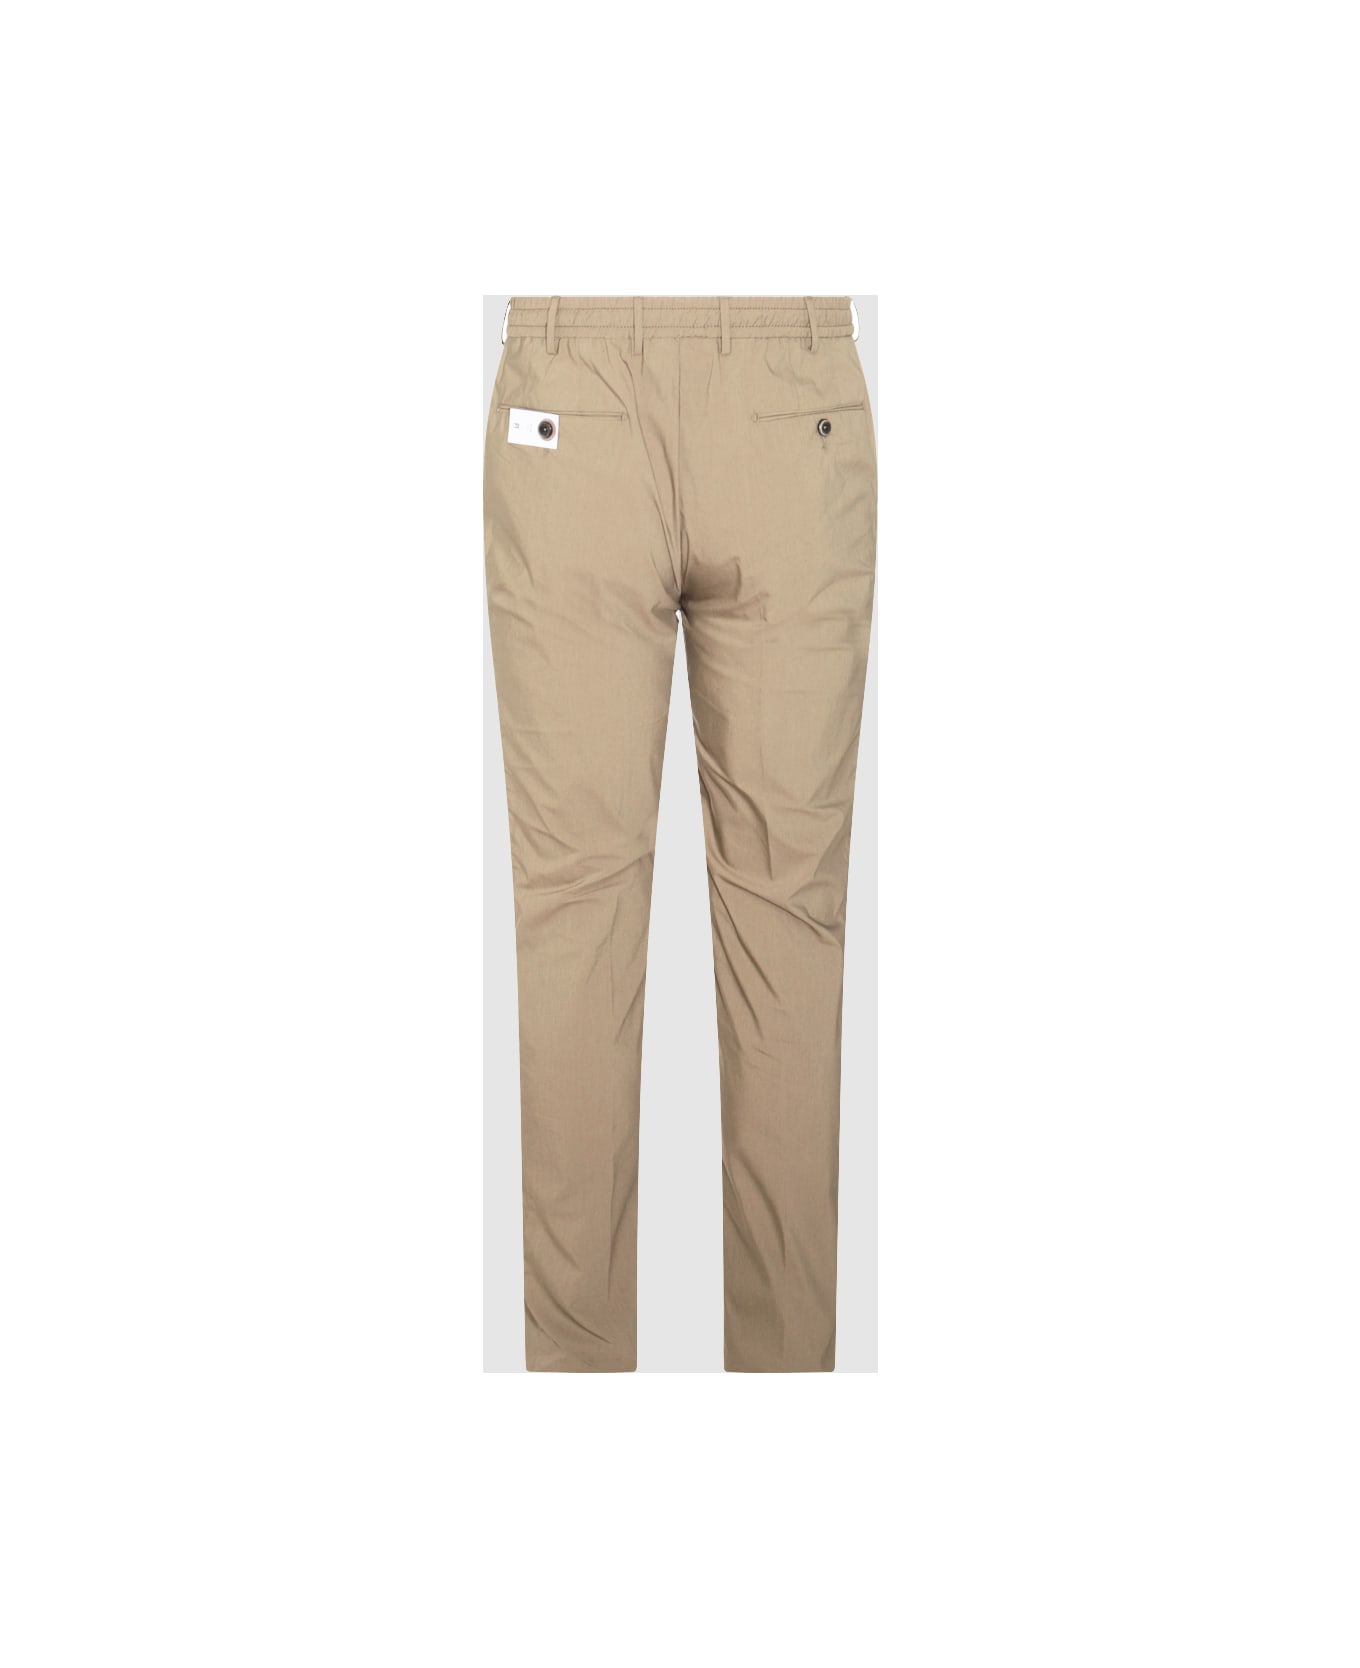 PT Torino Beige Cotton Pants - BEIGE FREDDO